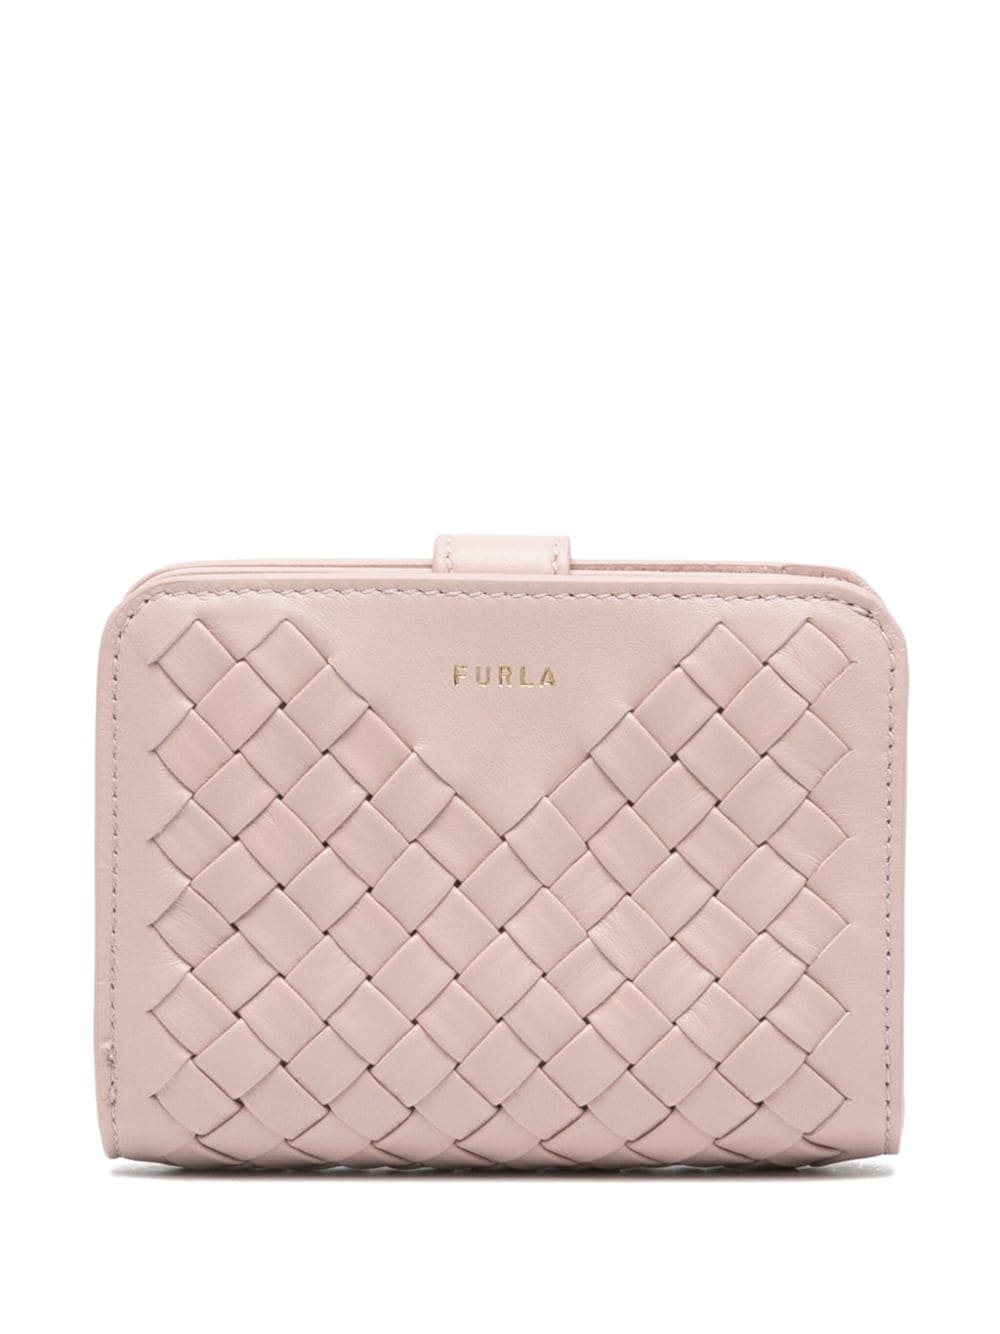 Furla Small Gerla Leather Wallet In Pink